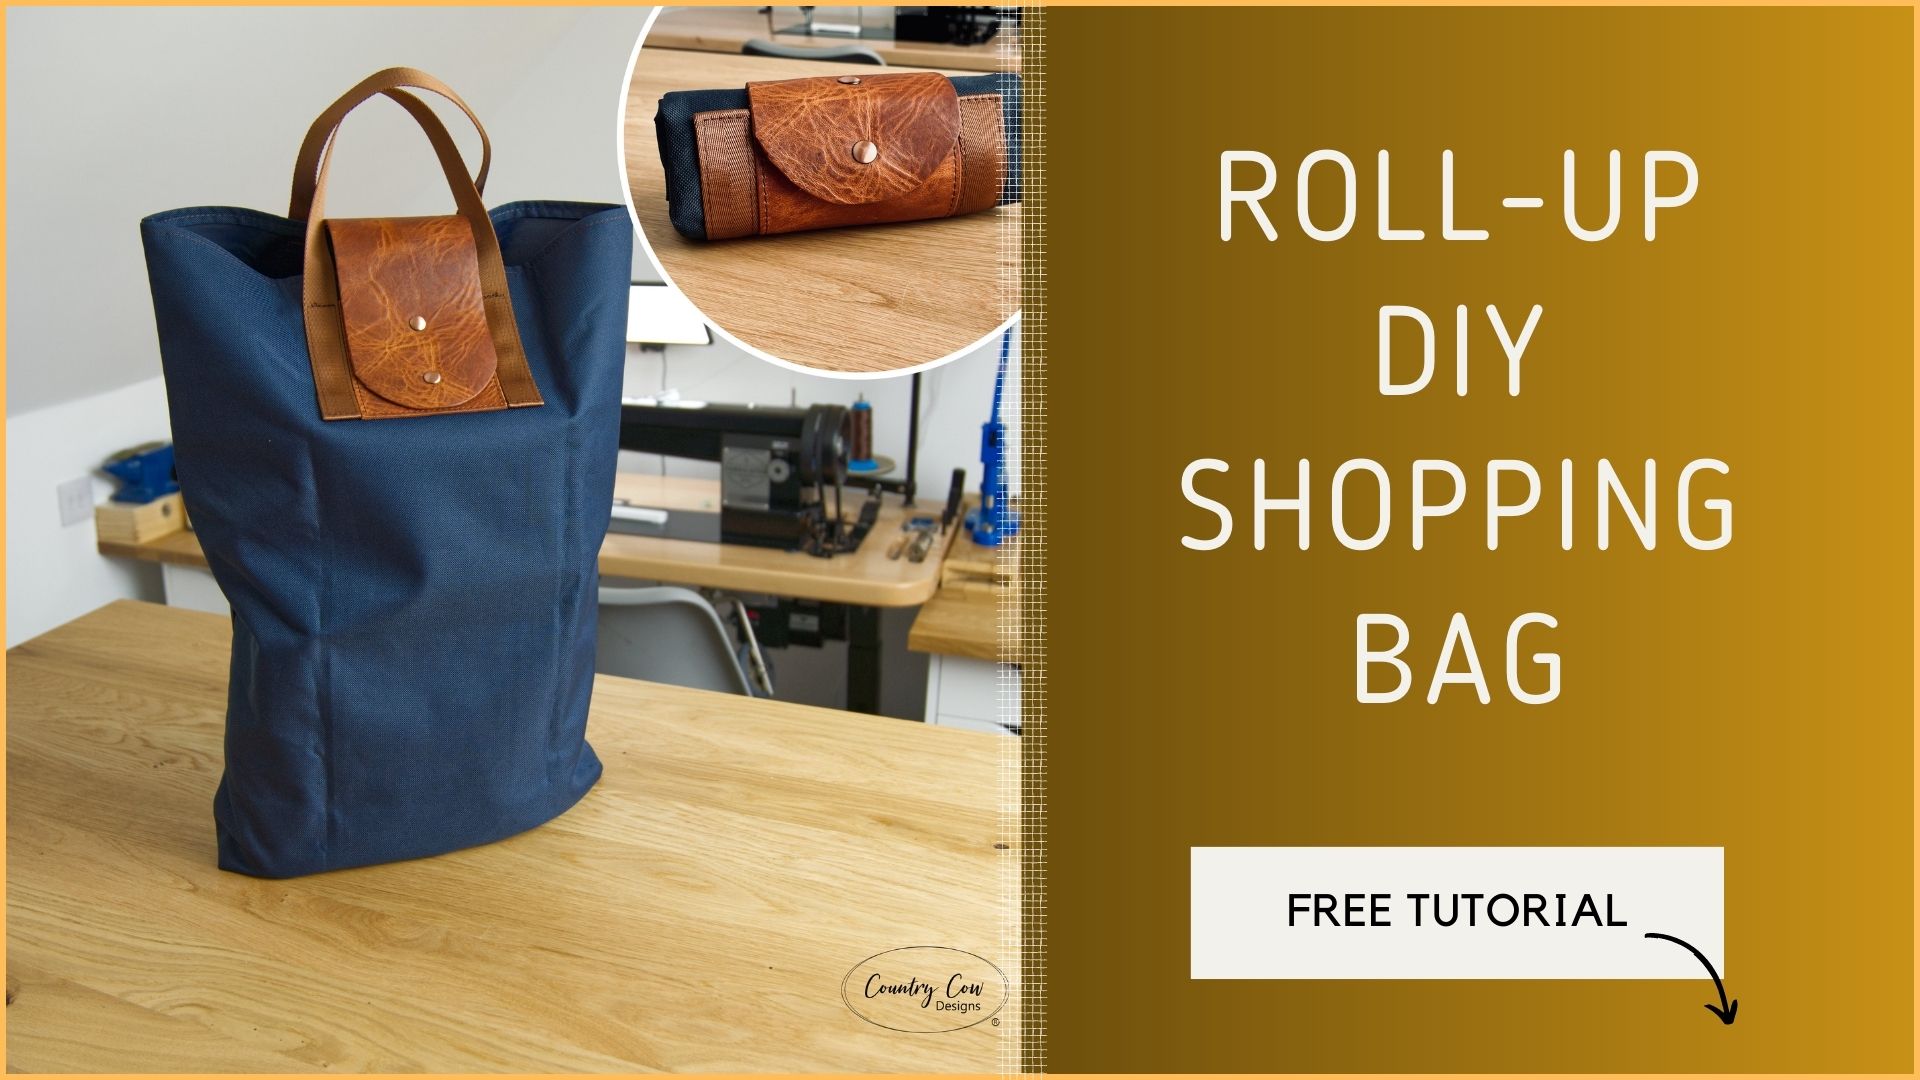 Roll up DIY Shopping Bag Tutorial